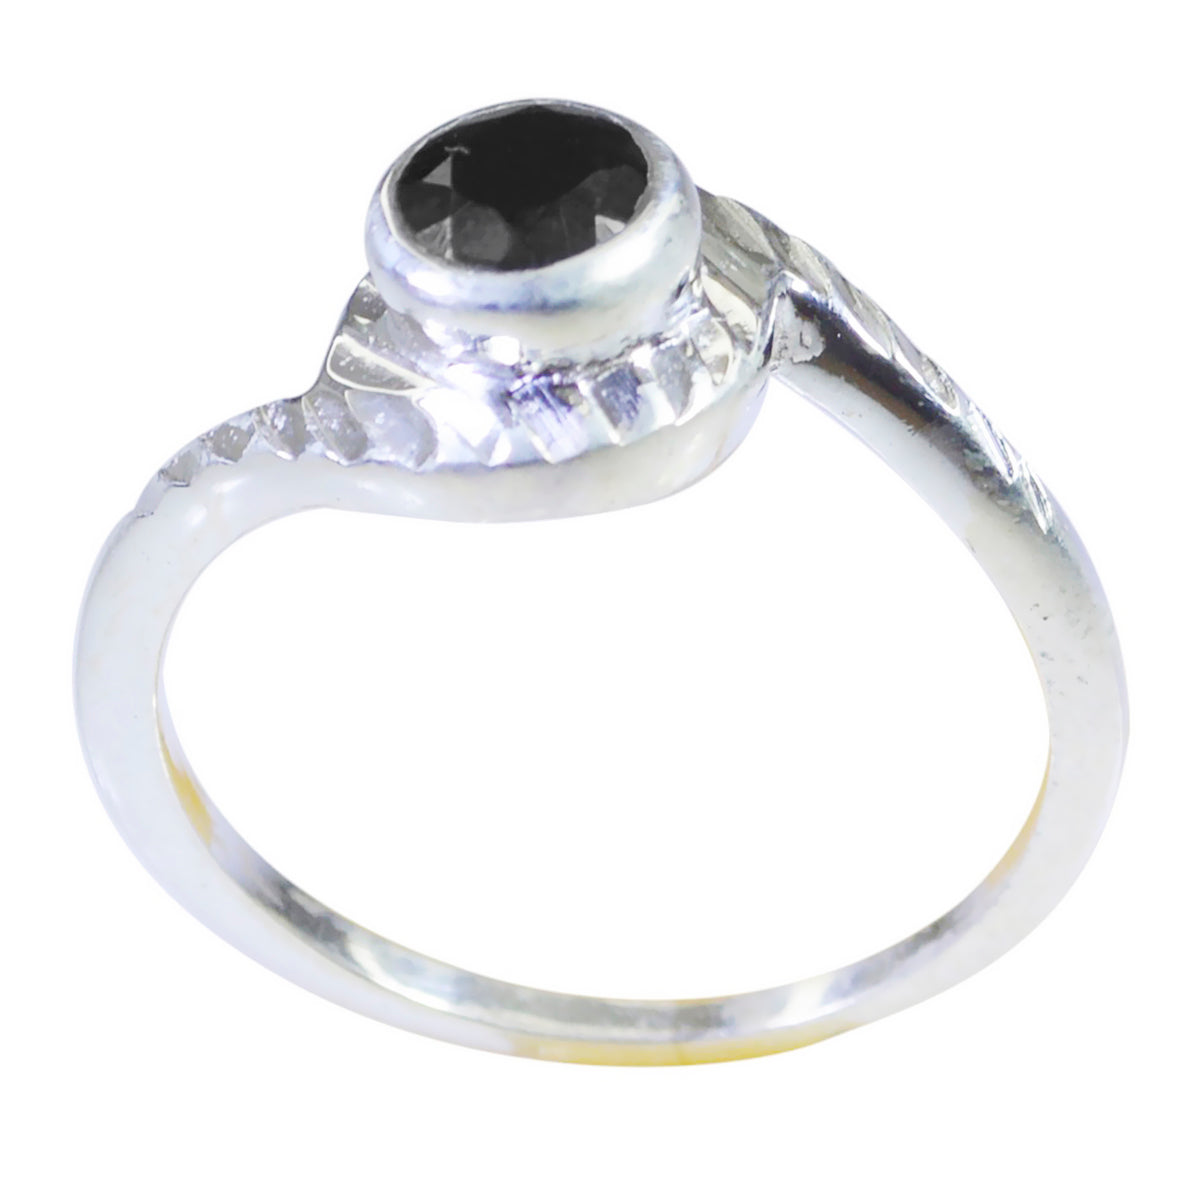 Riyo Handsome Gemstones Black Onyx 925 Silver Rings Husband Gift